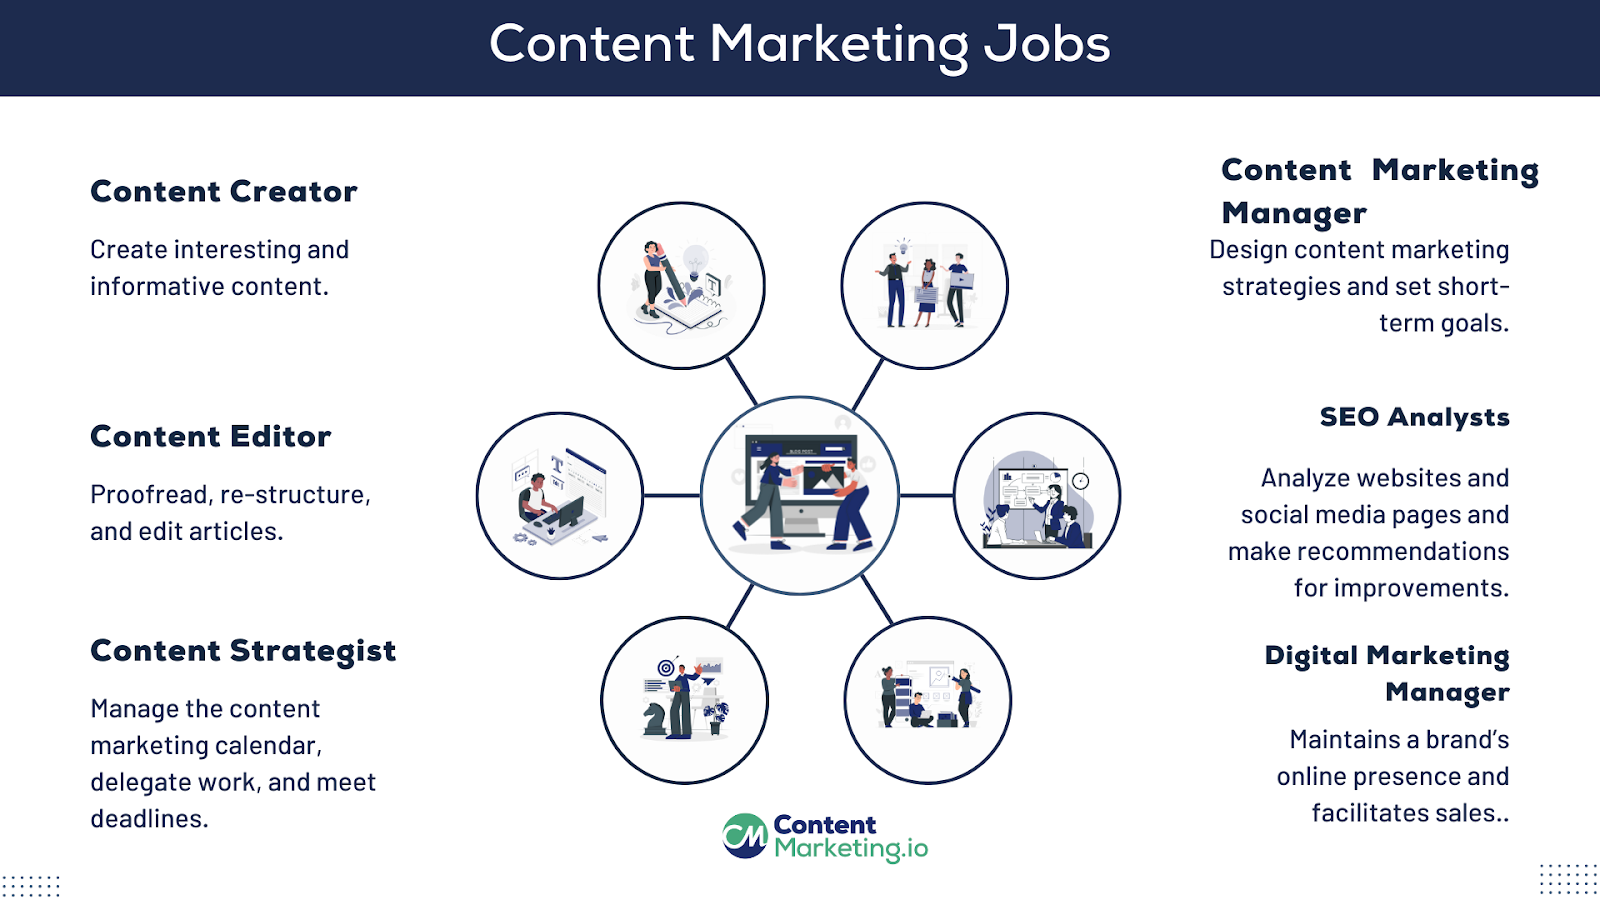 Content Marketing Jobs - A Glance